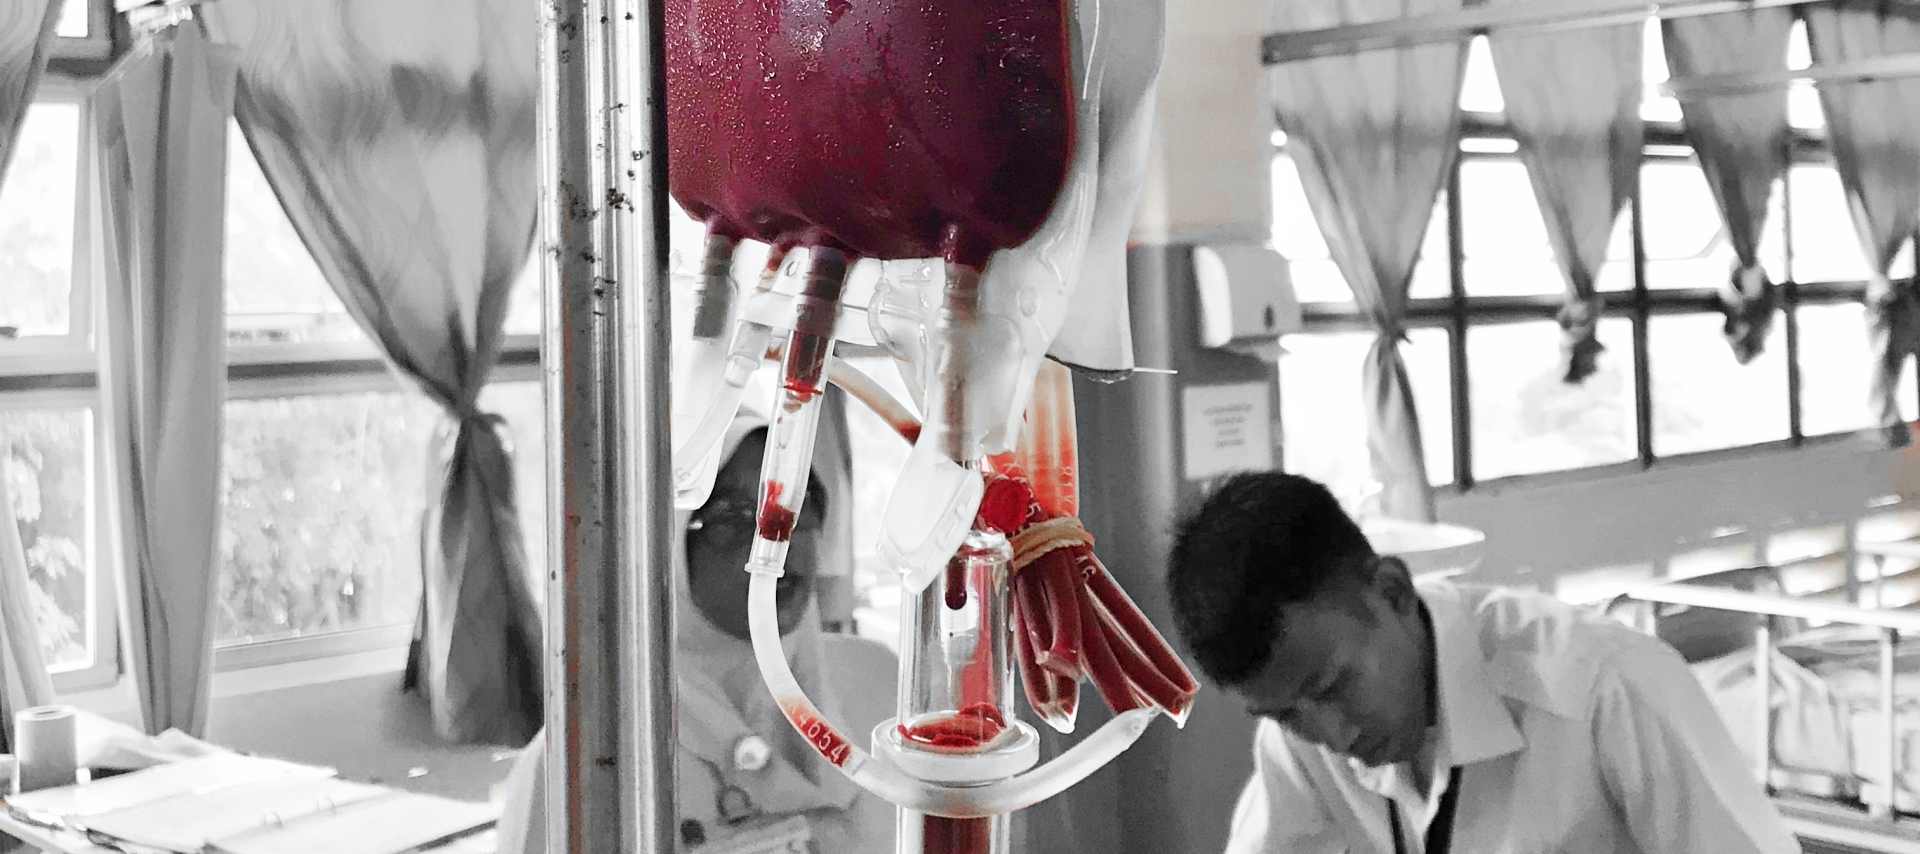 Critical global blood shortage